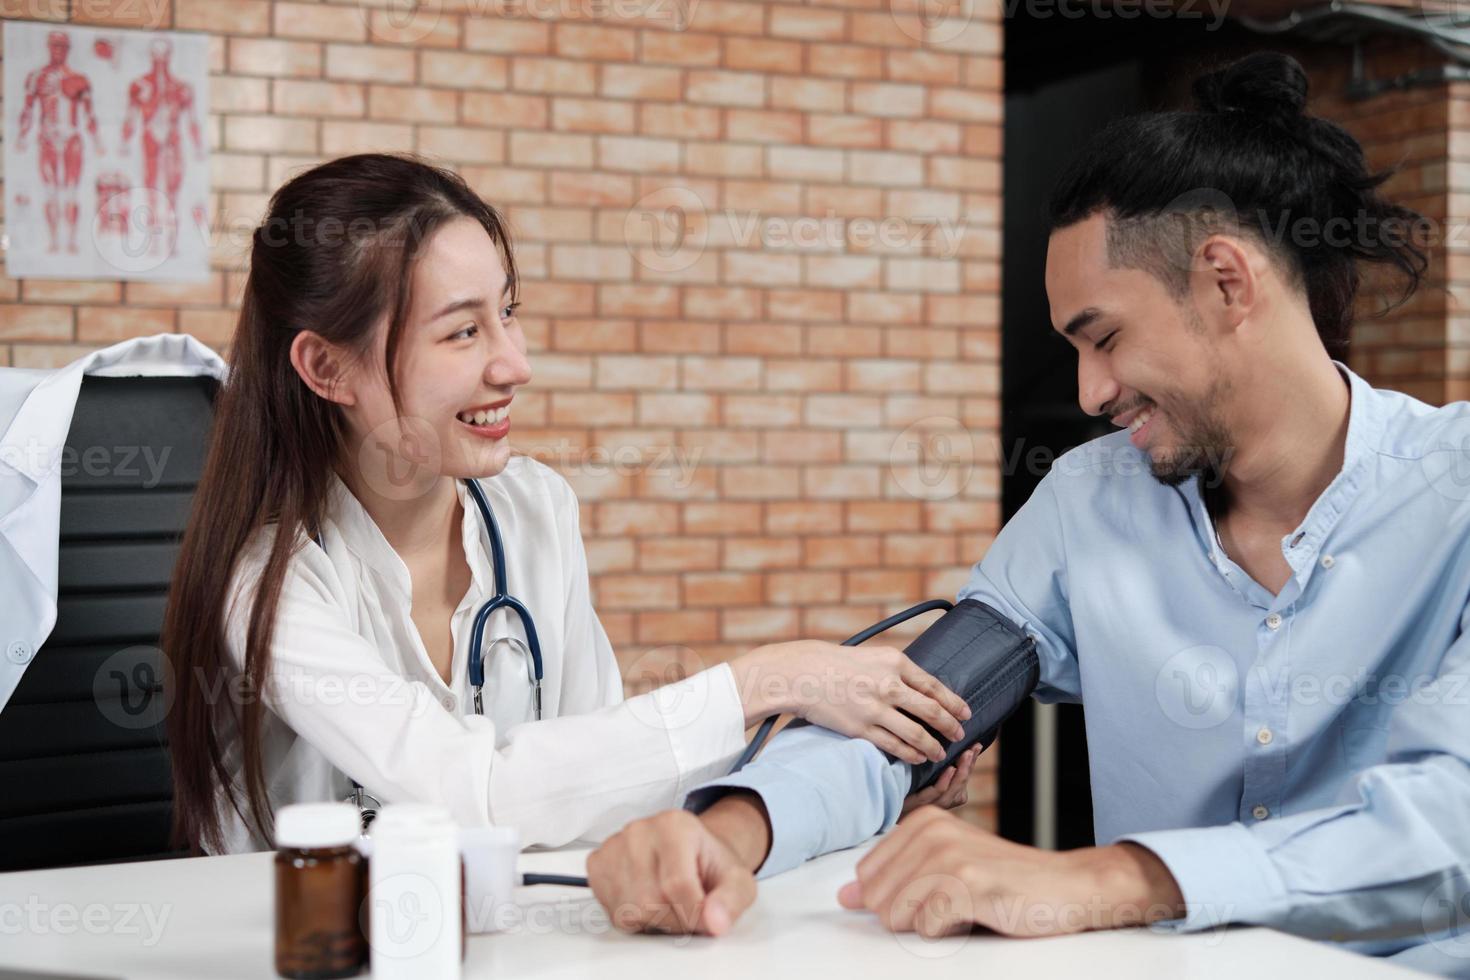 mooie vrouw arts in wit overhemd die Aziatische persoon met stethoscoop is gezondheid onderzoekt mannelijke patiënt in bakstenen muur achtergrond medische kliniek, glimlachend adviserend medisch specialist beroep. foto